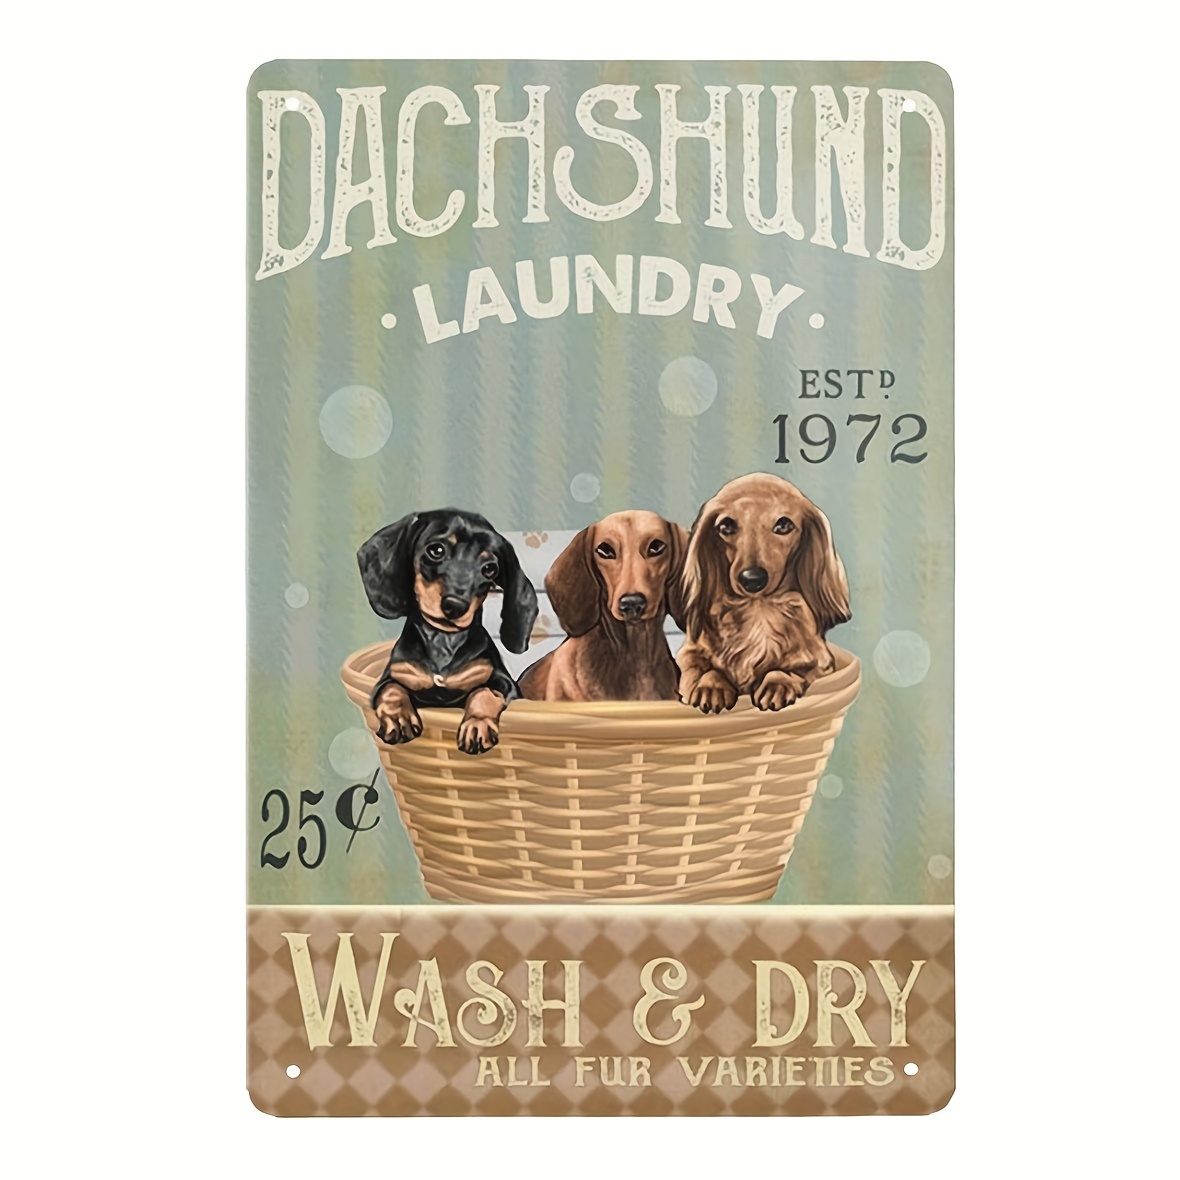 

Dachshund Dog Laundry Company Vintage Metal Sign - Wash & Dry All Fur Varieties, Retro Tin Wall Decor For Laundry Room, Home, Coffee Shop - English, Multi-purpose, Easy Hang, 8x12 Inch - 1 Pc